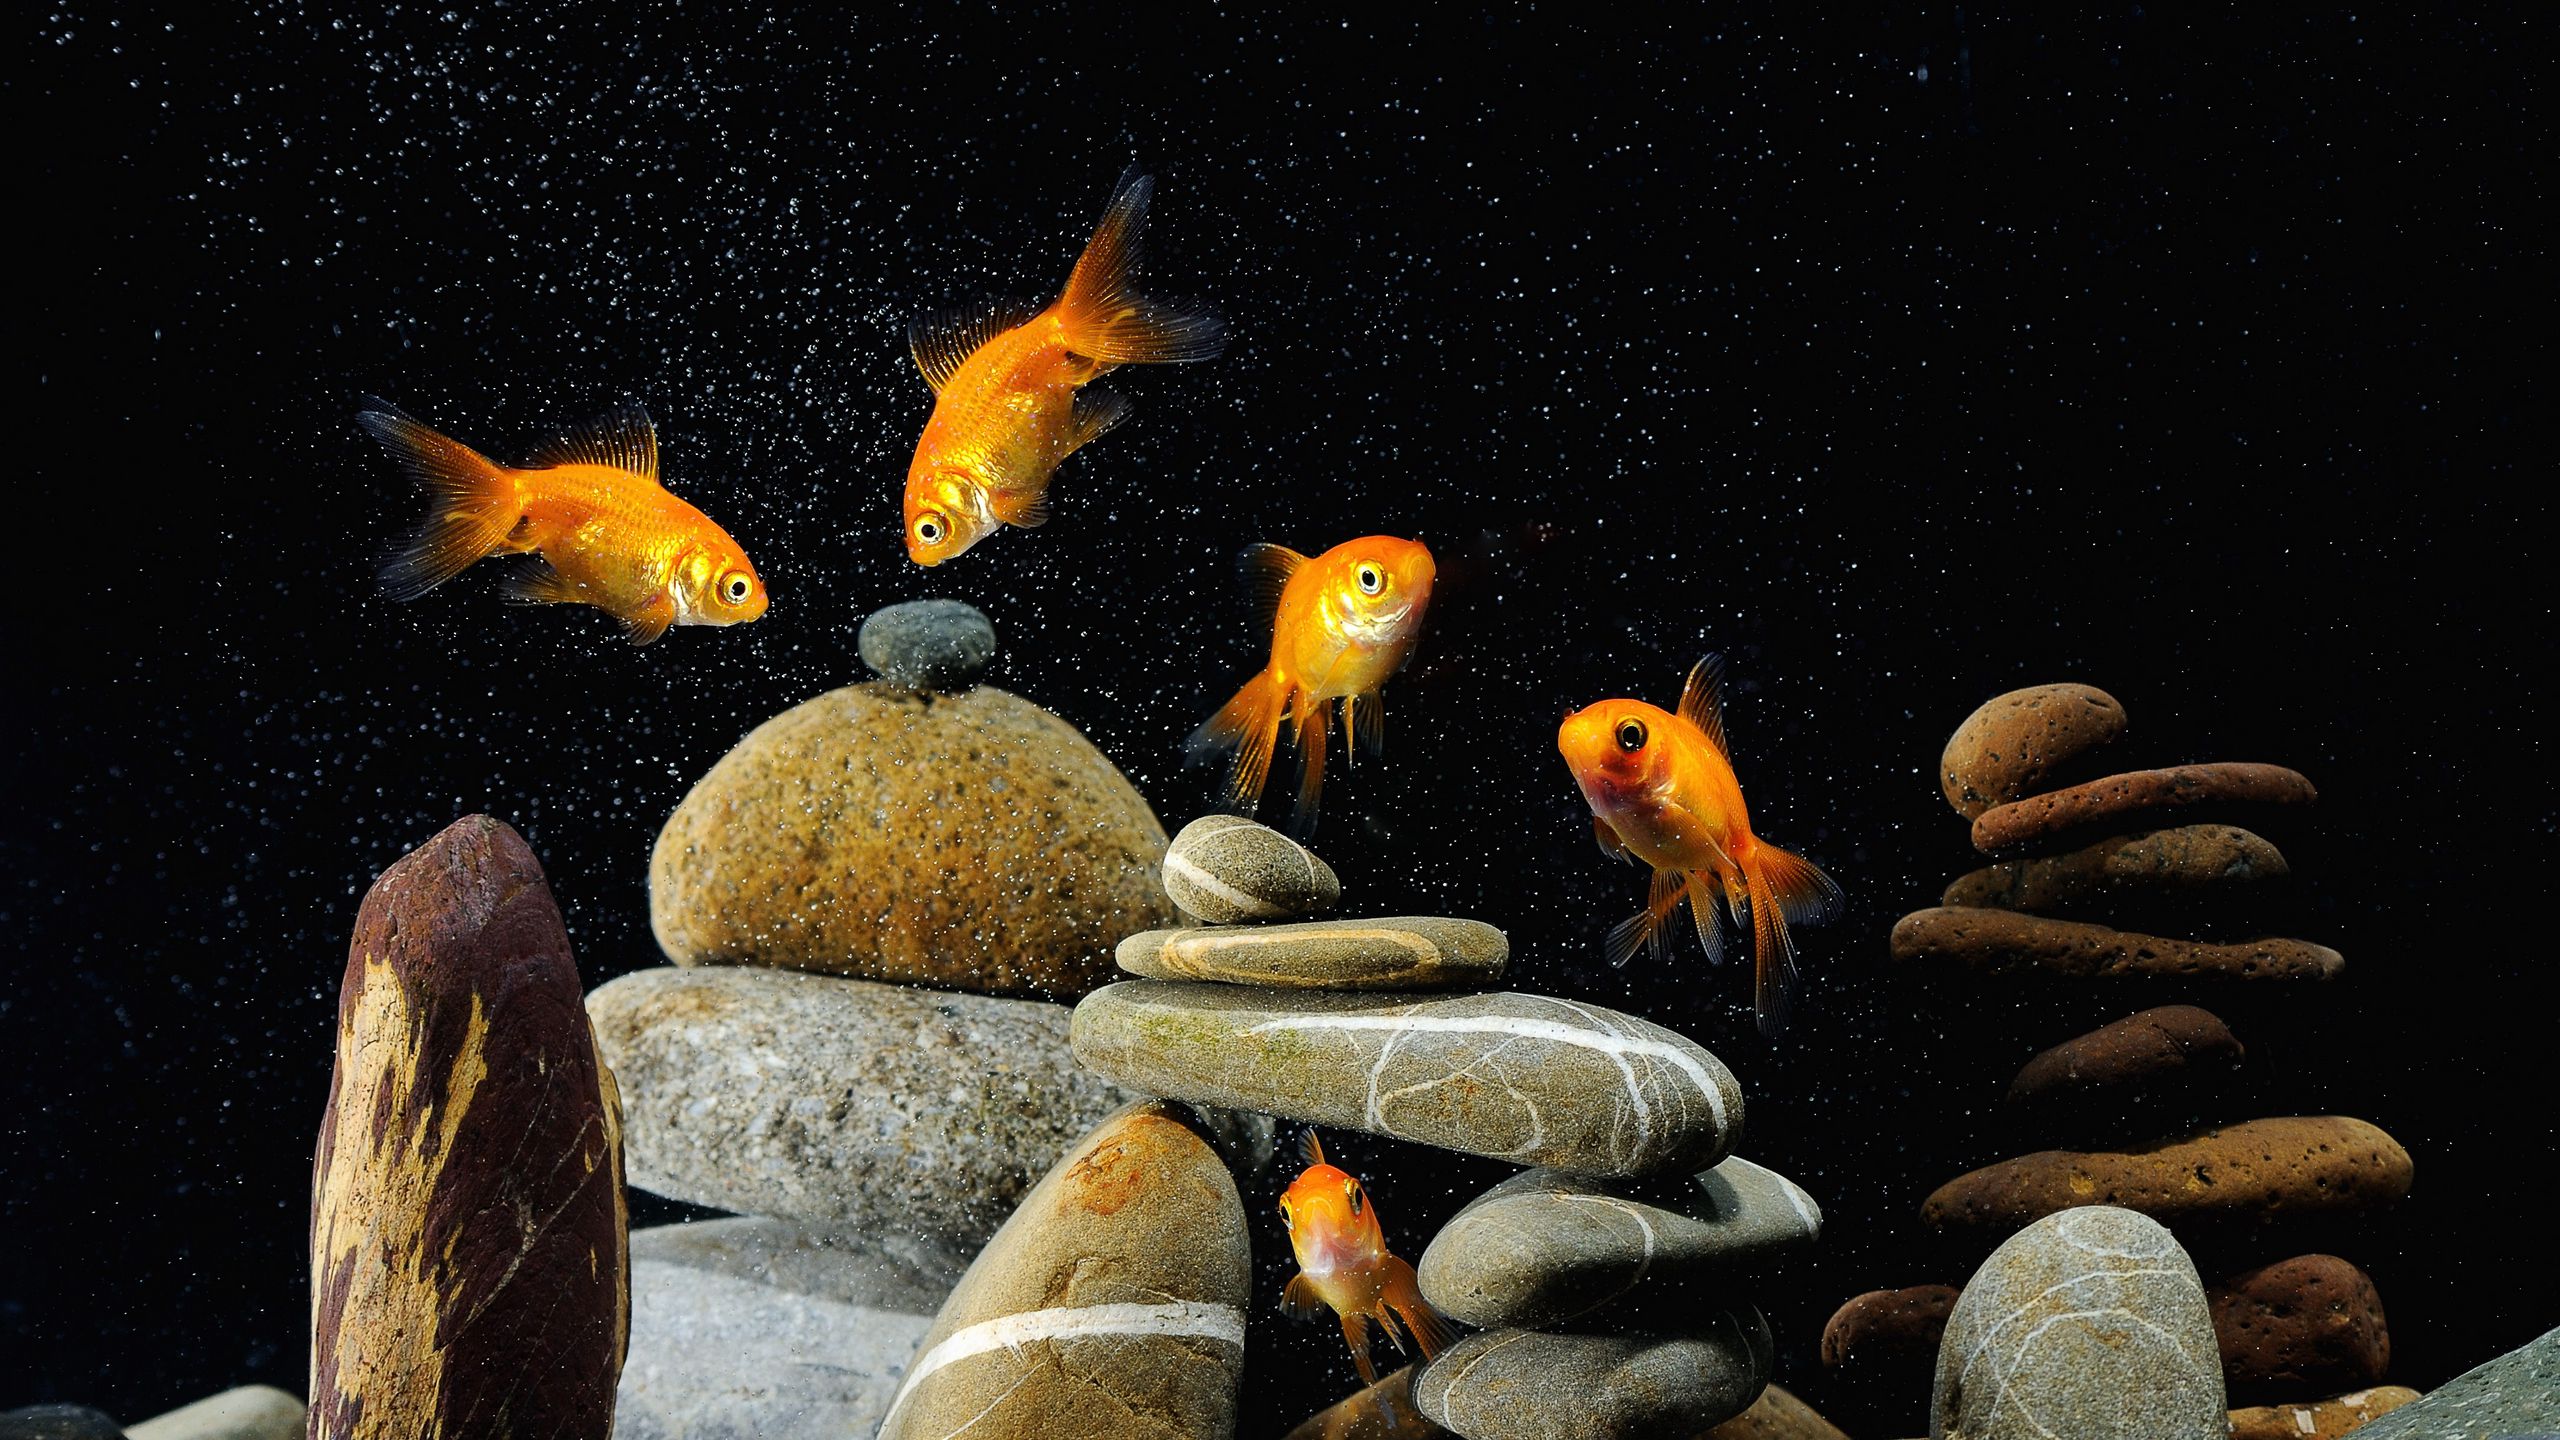 Download wallpaper 2560x1440 fish, aquarium, rocks, black background  widescreen 16:9 hd background